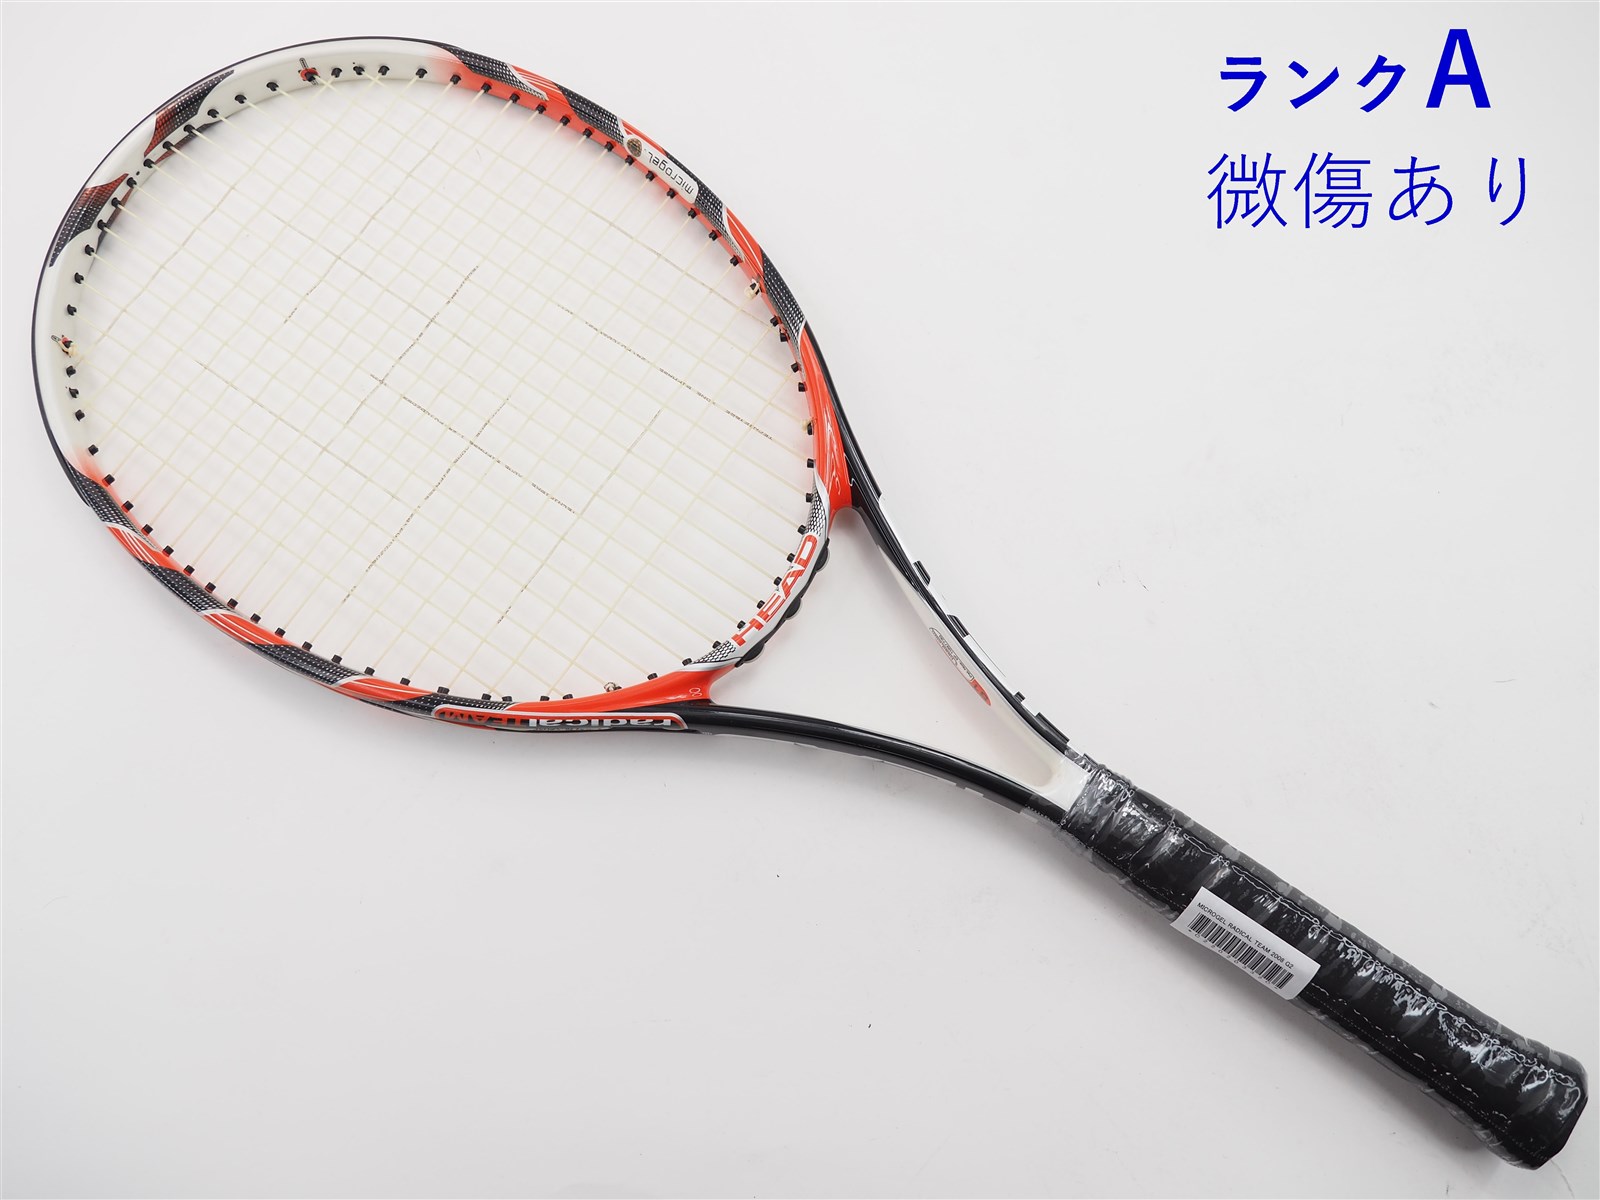 HEAD  i.radical OS 硬式テニスラケット2本セット